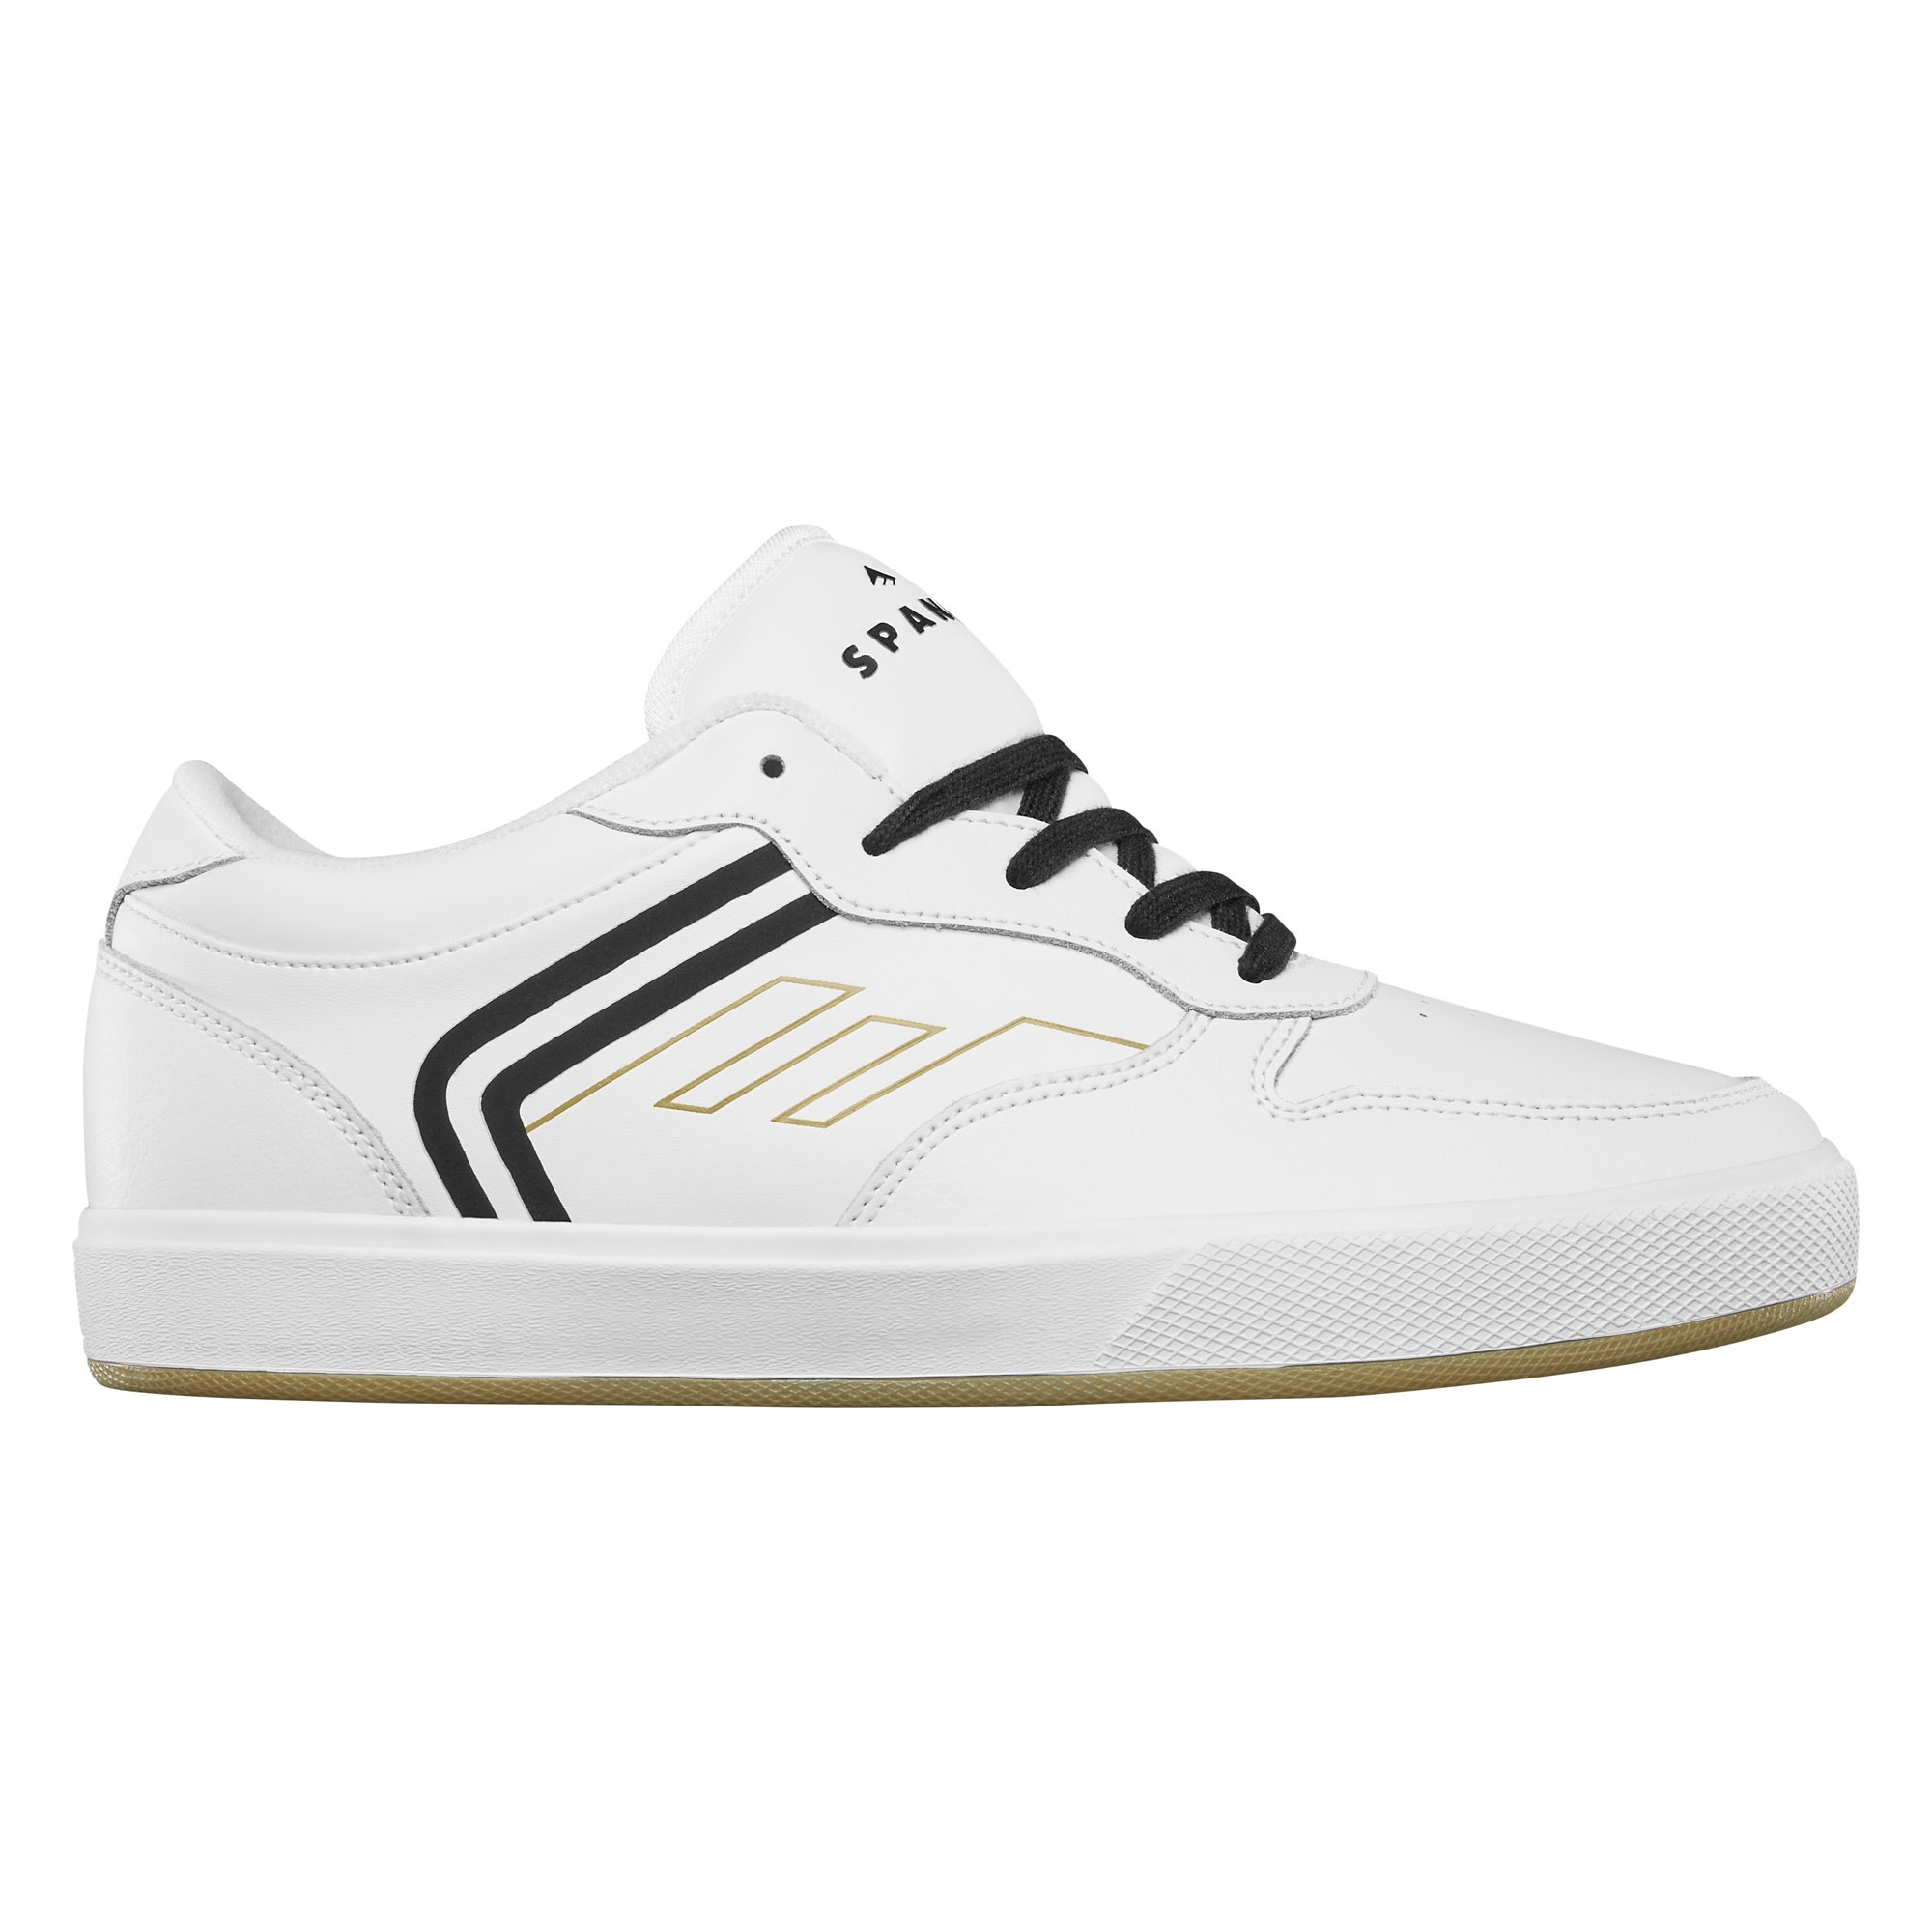 EMERICA Shoe KSL G6 X THIS IS SKATEBOARDING whi/bla white/black